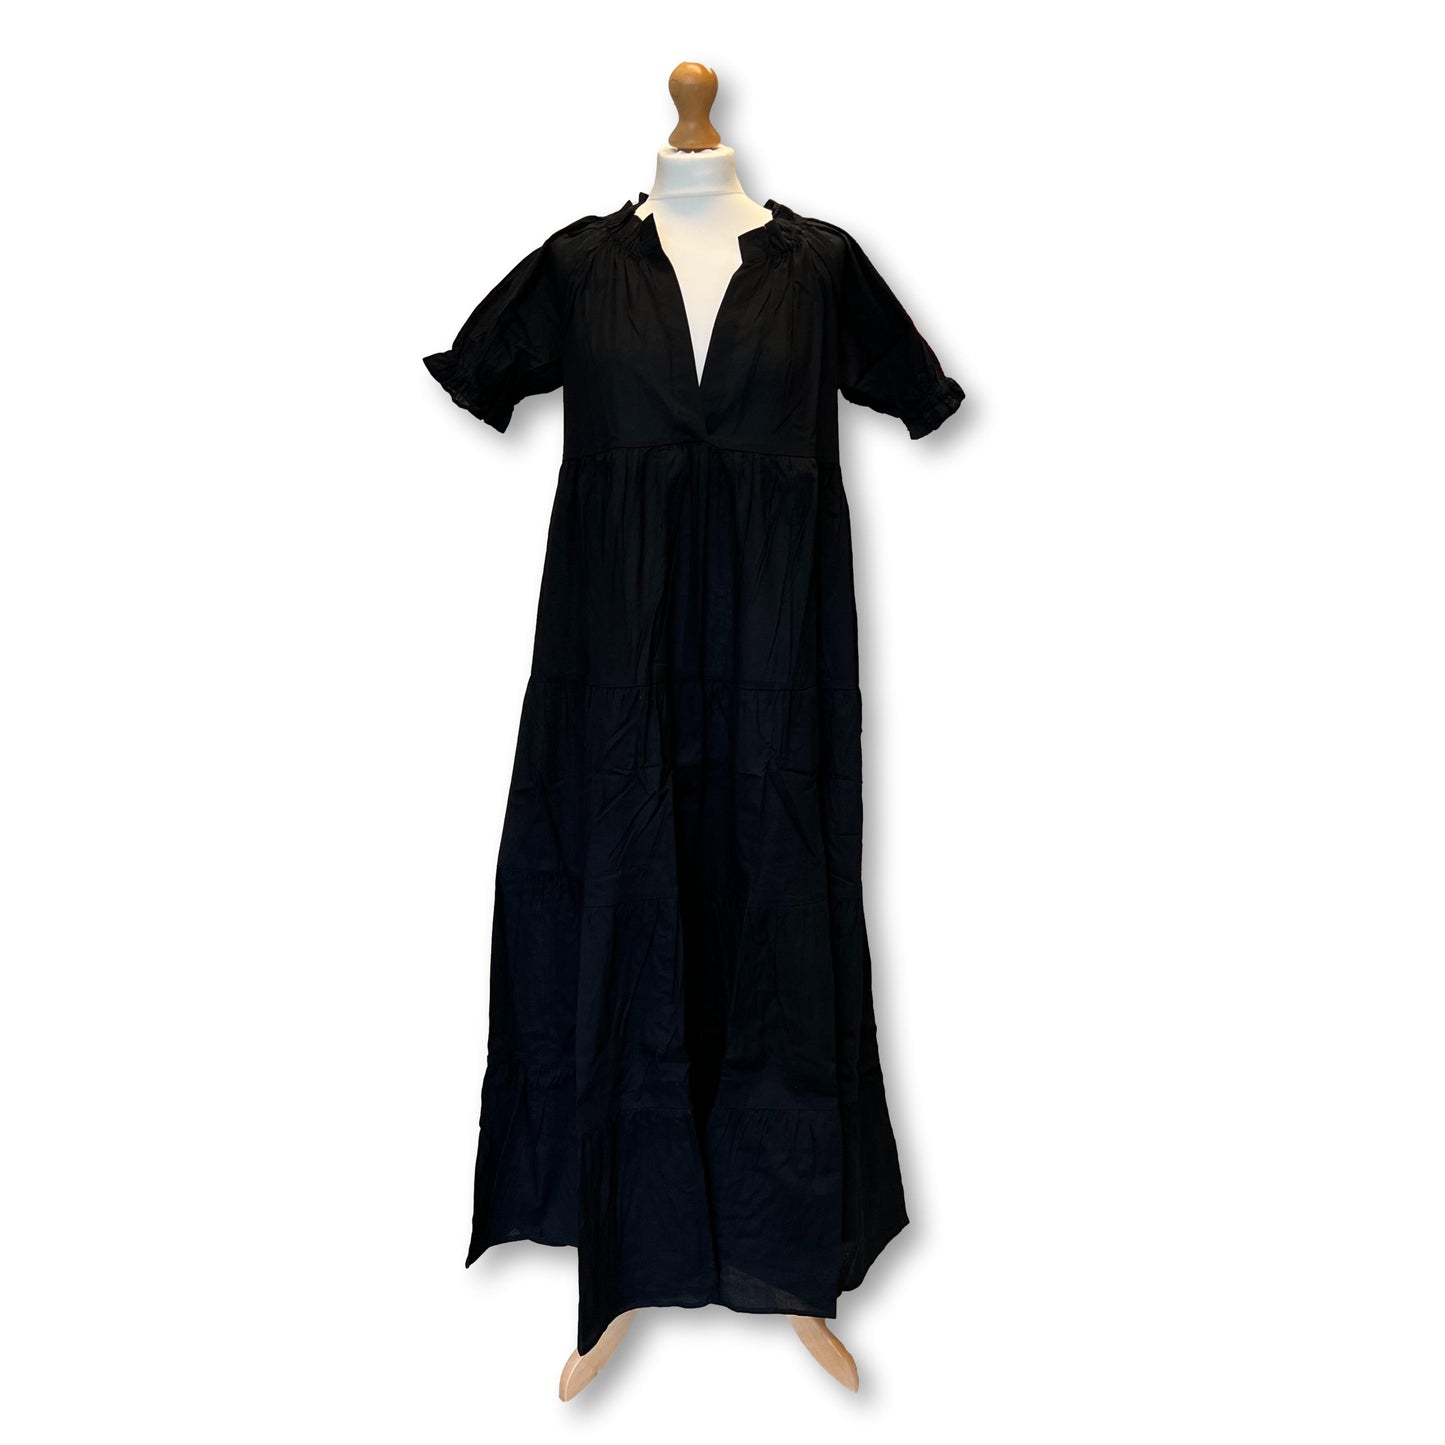 Mafalda Black Cotton Dress - Extra Long